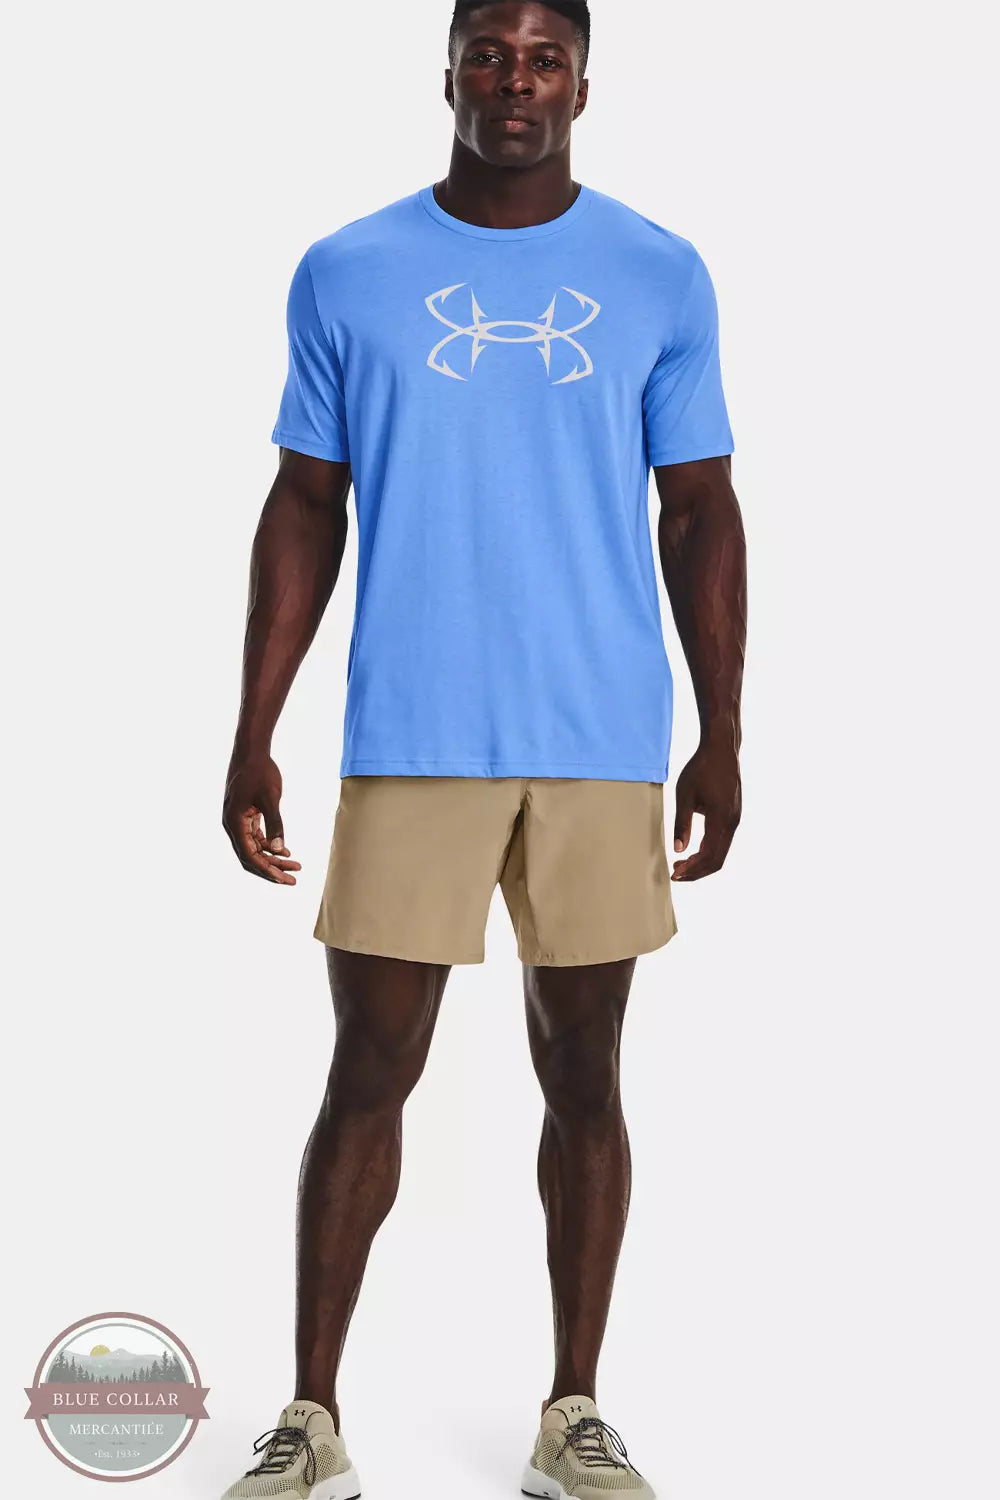 Under Armour Men's Fish Hook Logo T-Shirt - Blue, LG